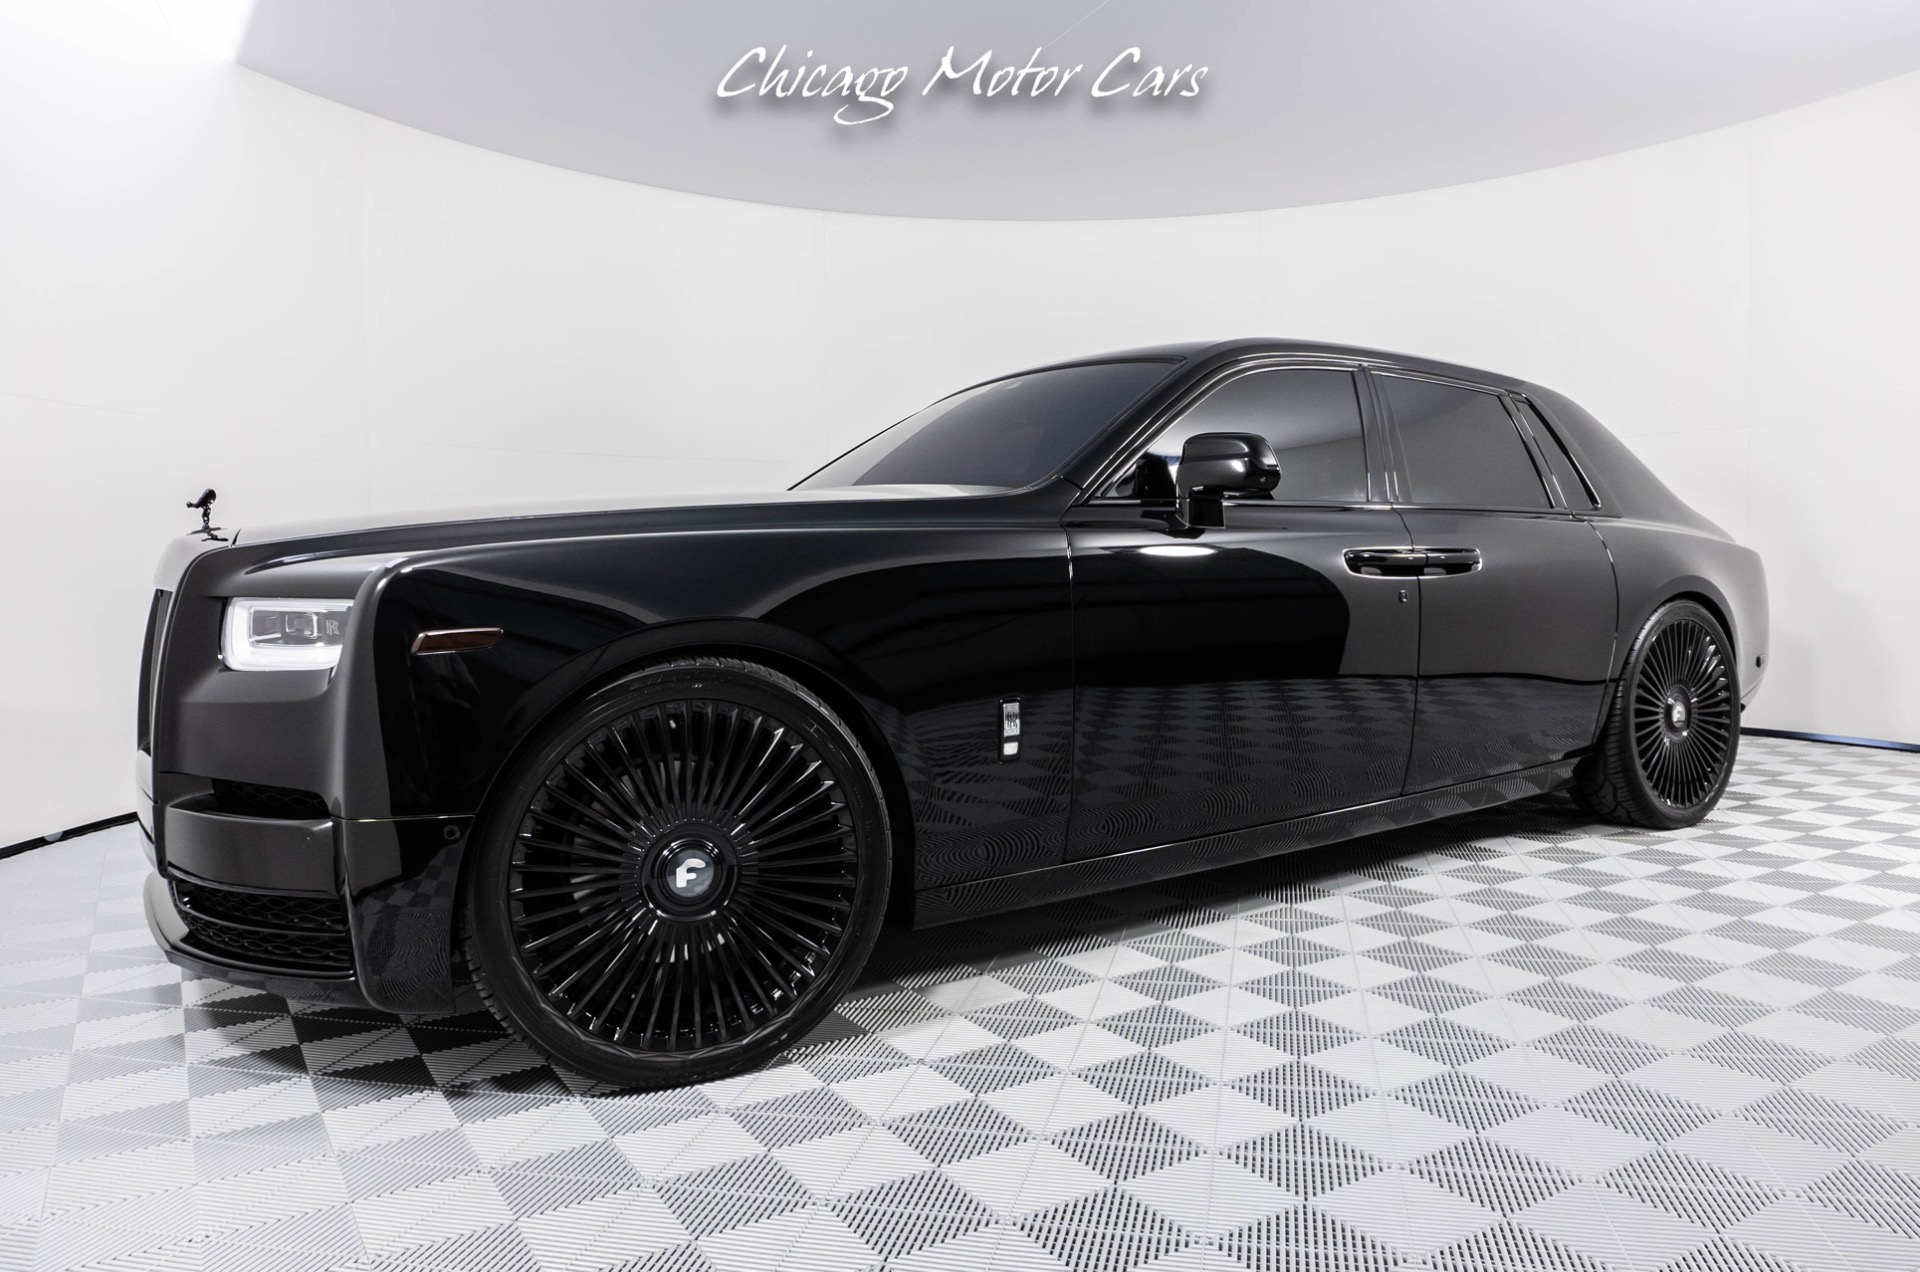 Used Black Petrol RollsRoyce Phantom Saloon Cars For Sale  AutoTrader UK